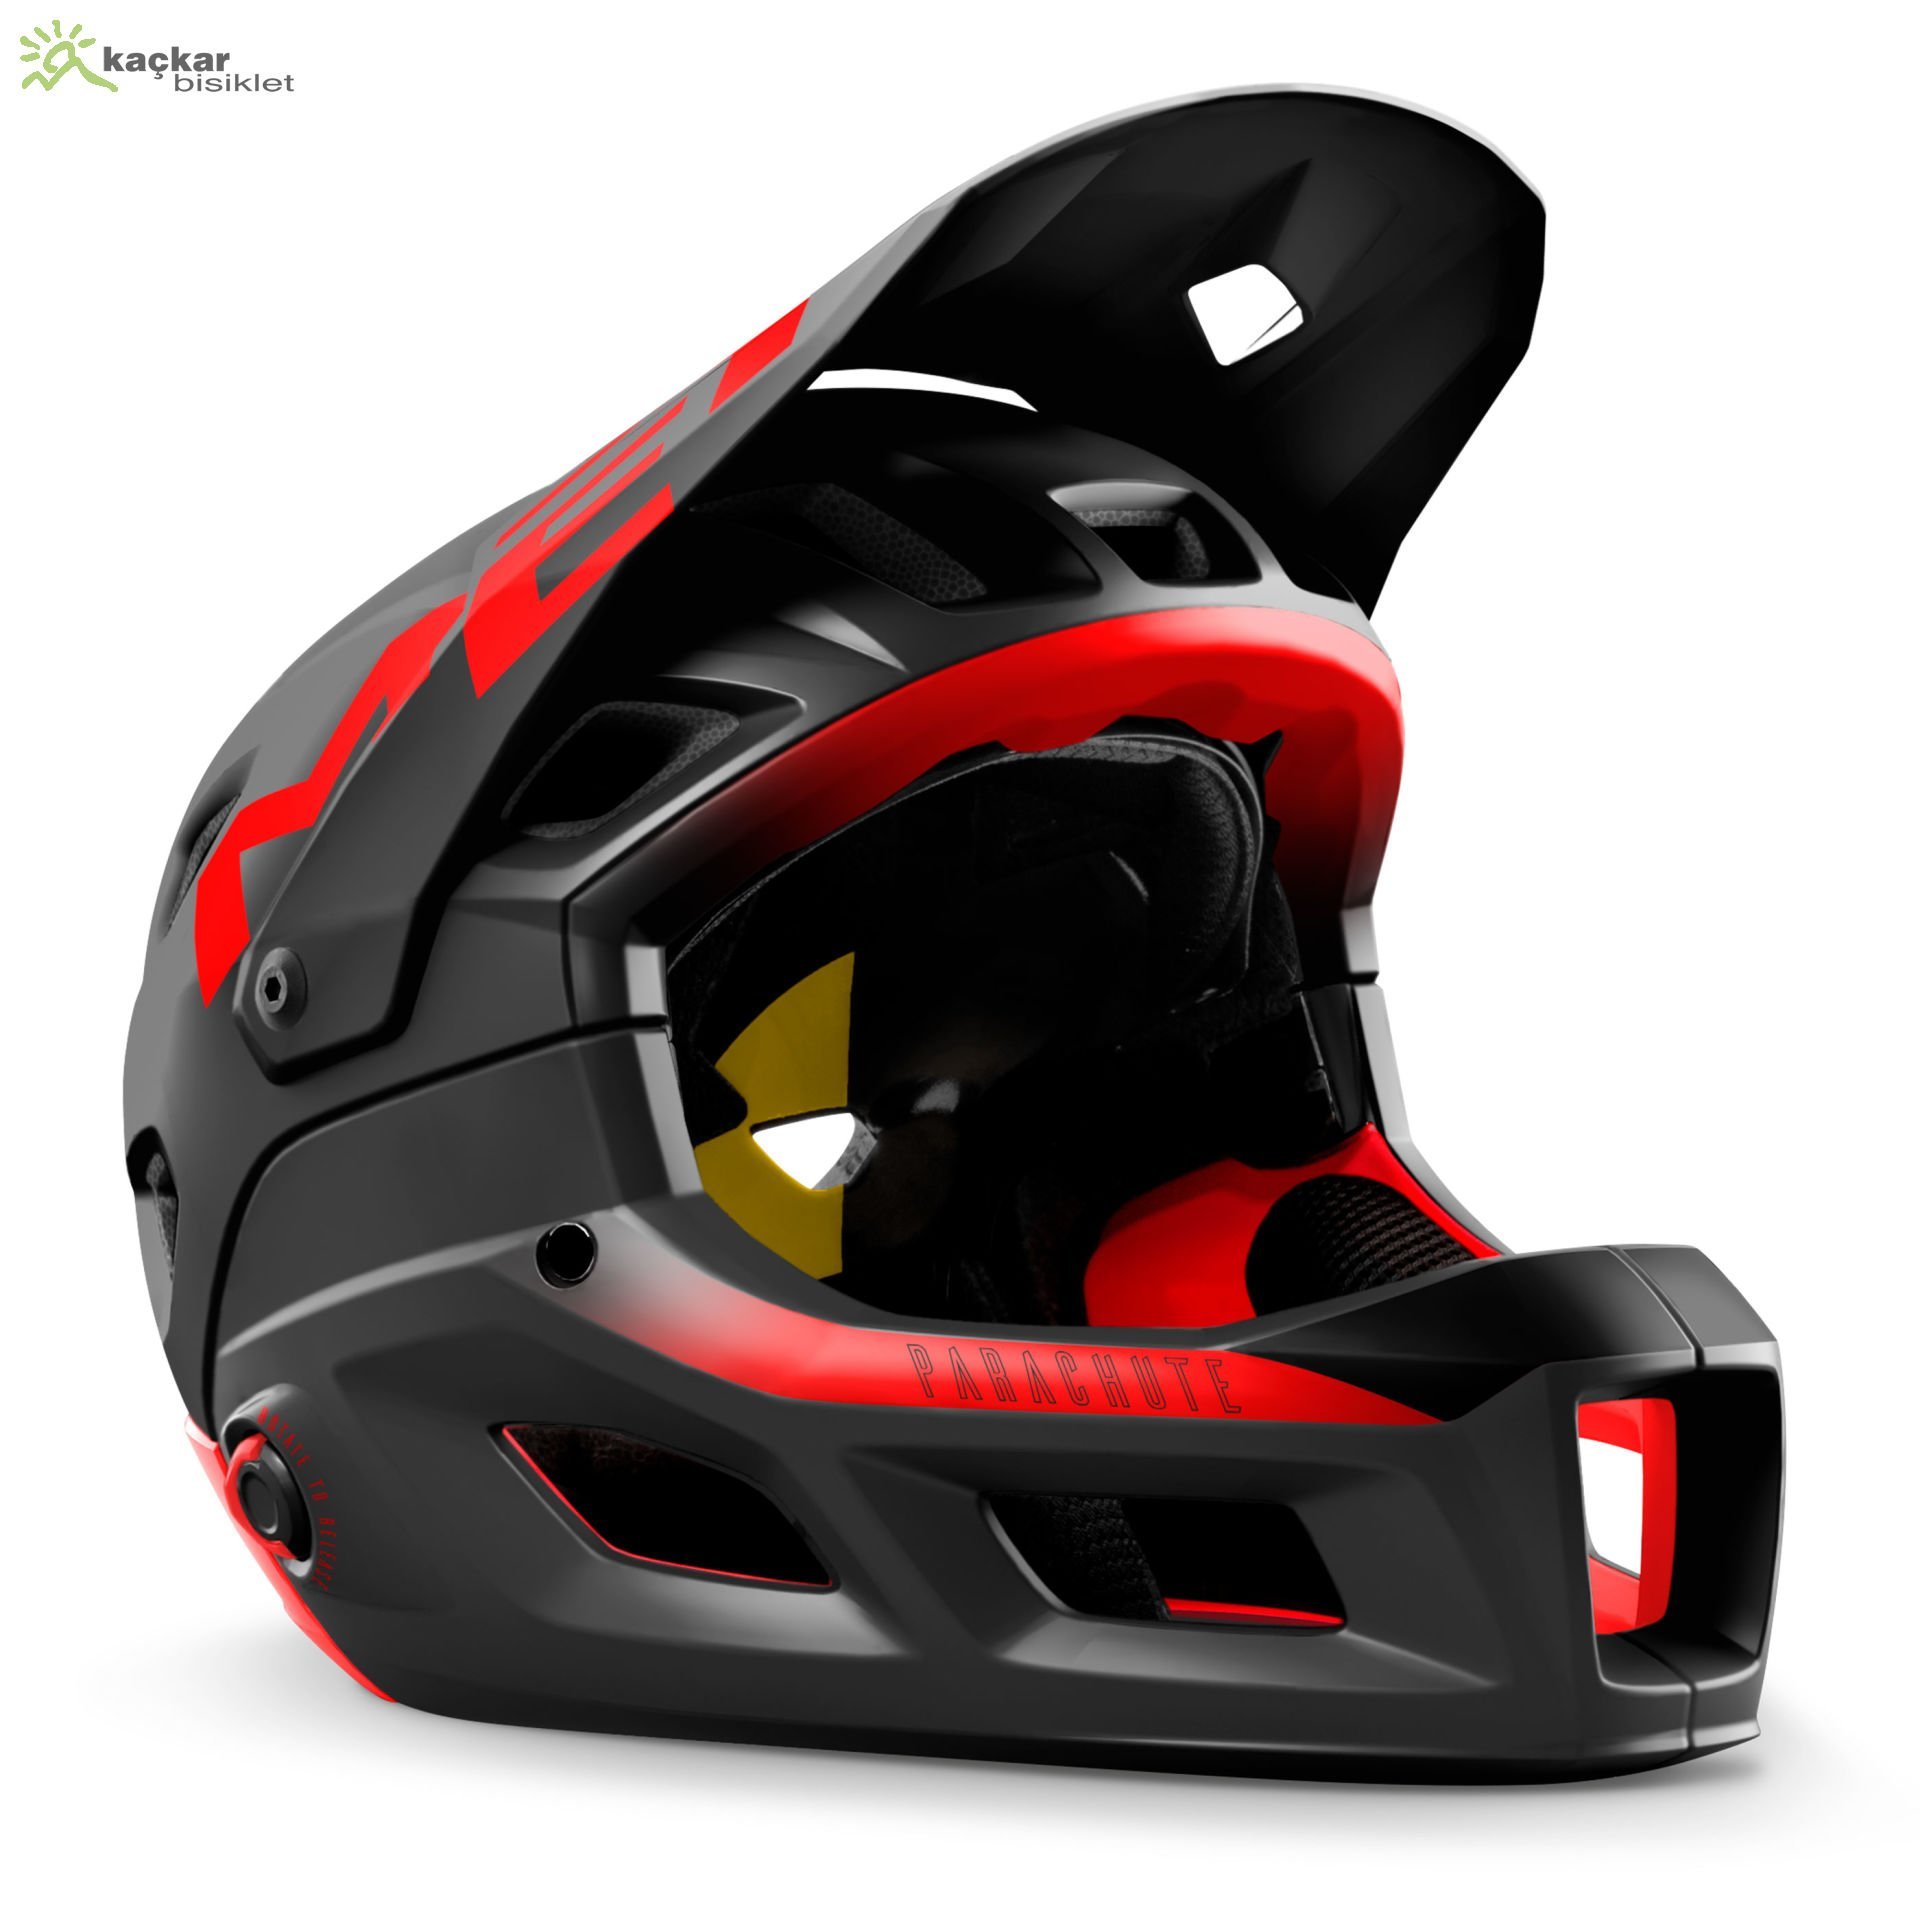 MET Helmets Parachute MCR Mips Full Face Kask Black Red / Matt Glossy